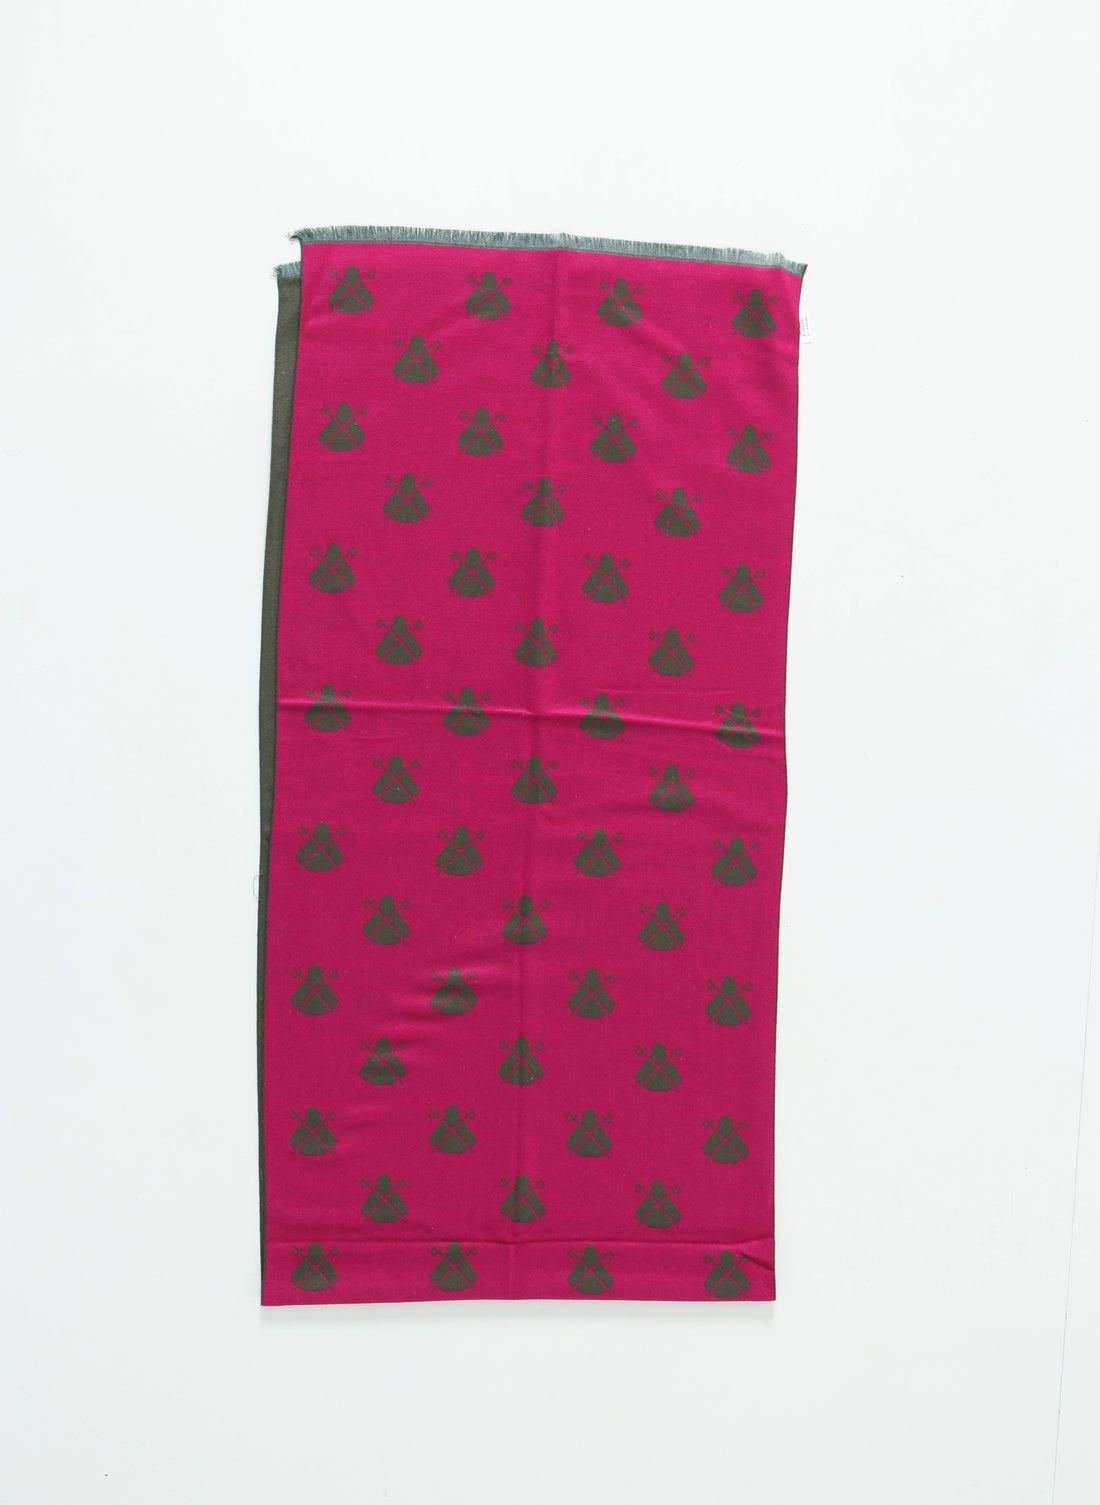 Khakigrüner Schal mit rosafarbenem Capote-Print